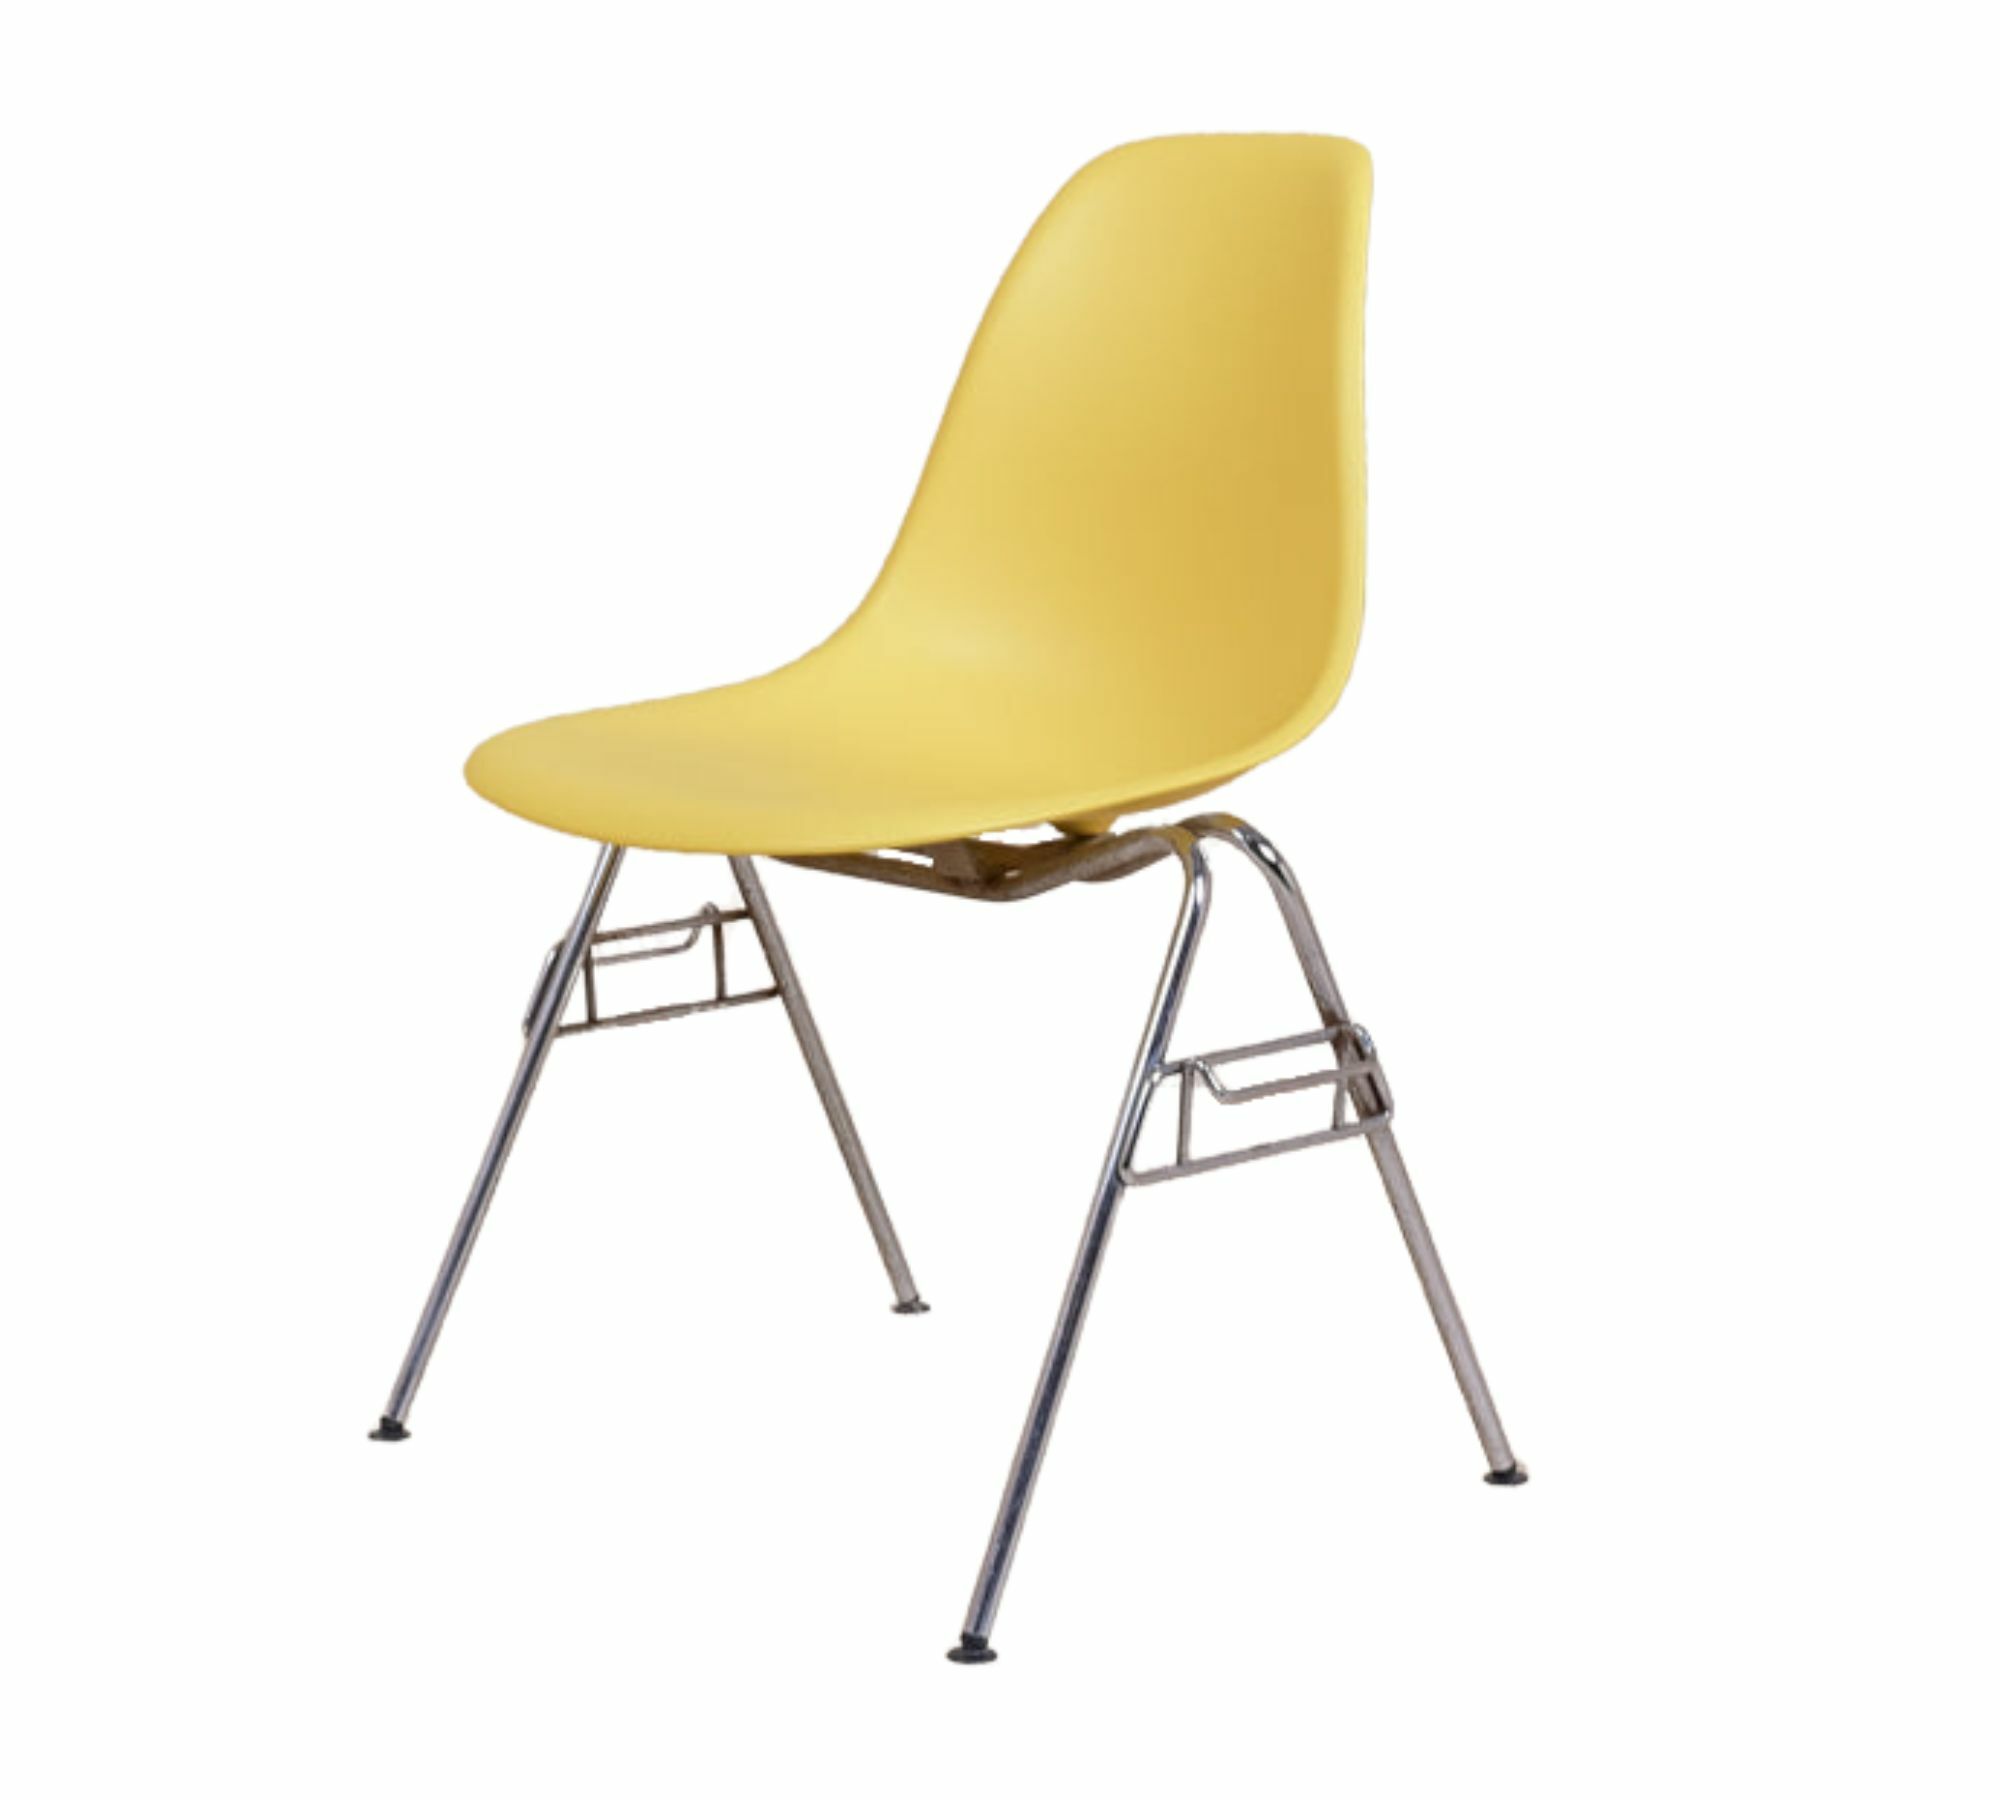 Eames DSS Plastic Side Chair Sunlight 0